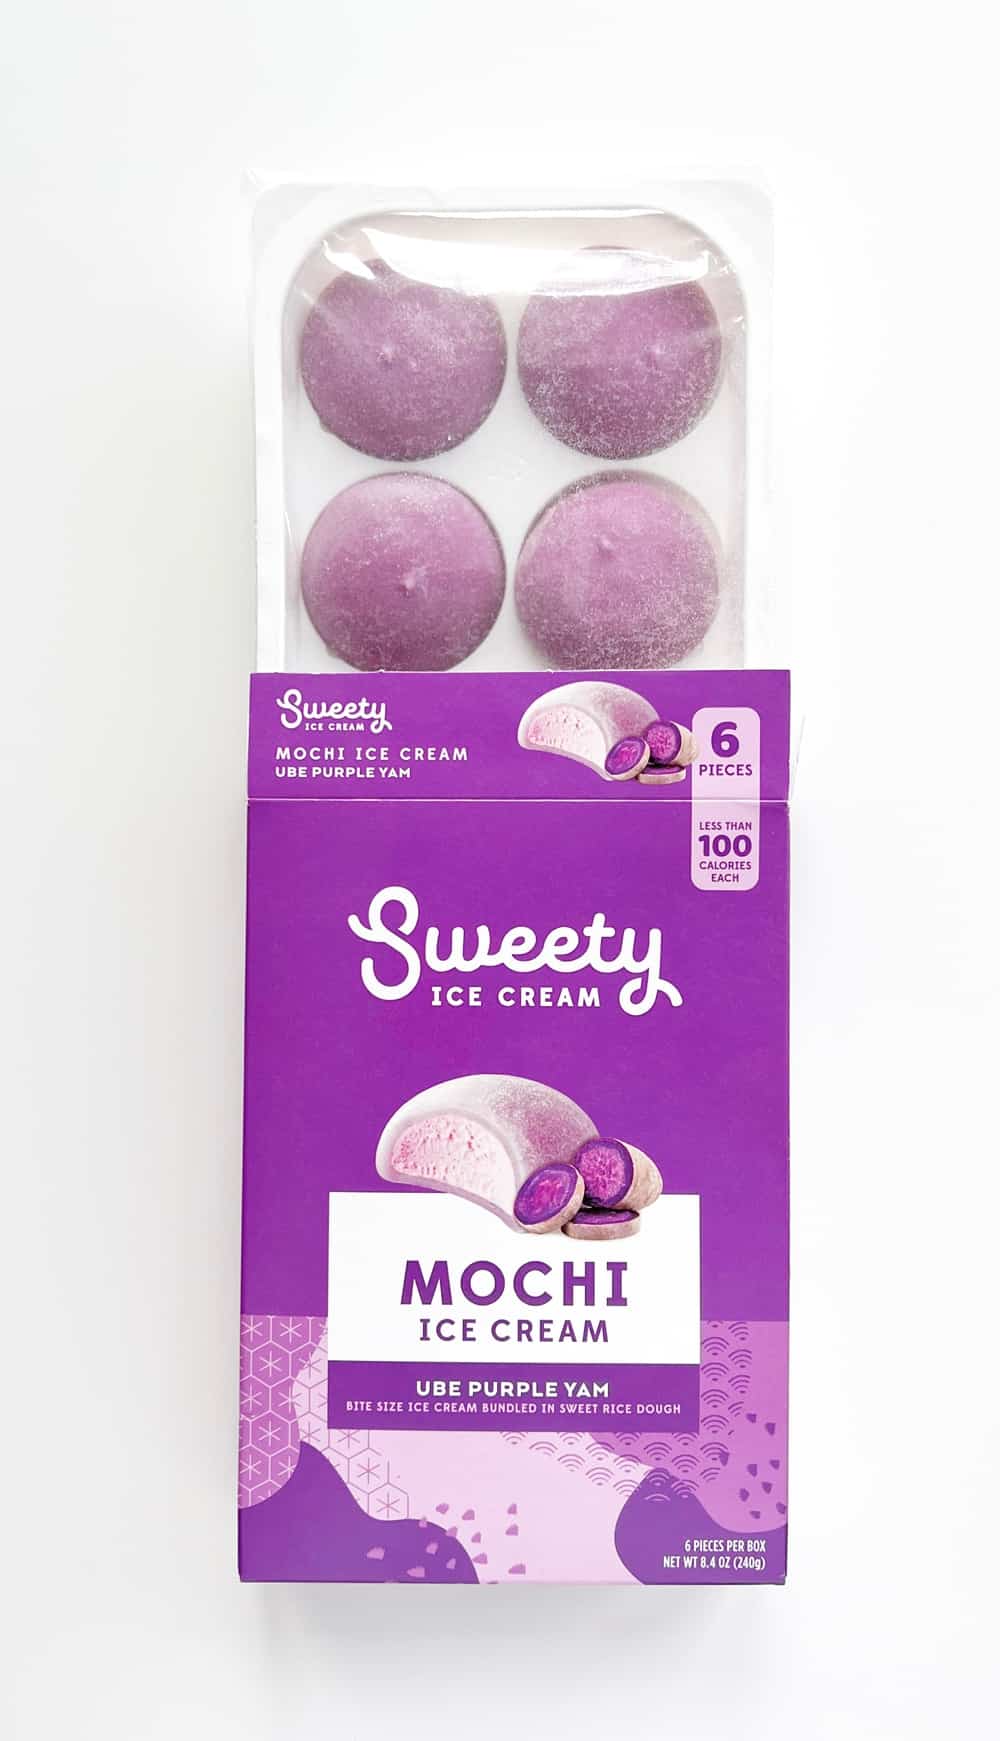 Sweety Mochi Ice Cream Ube Purple Yam